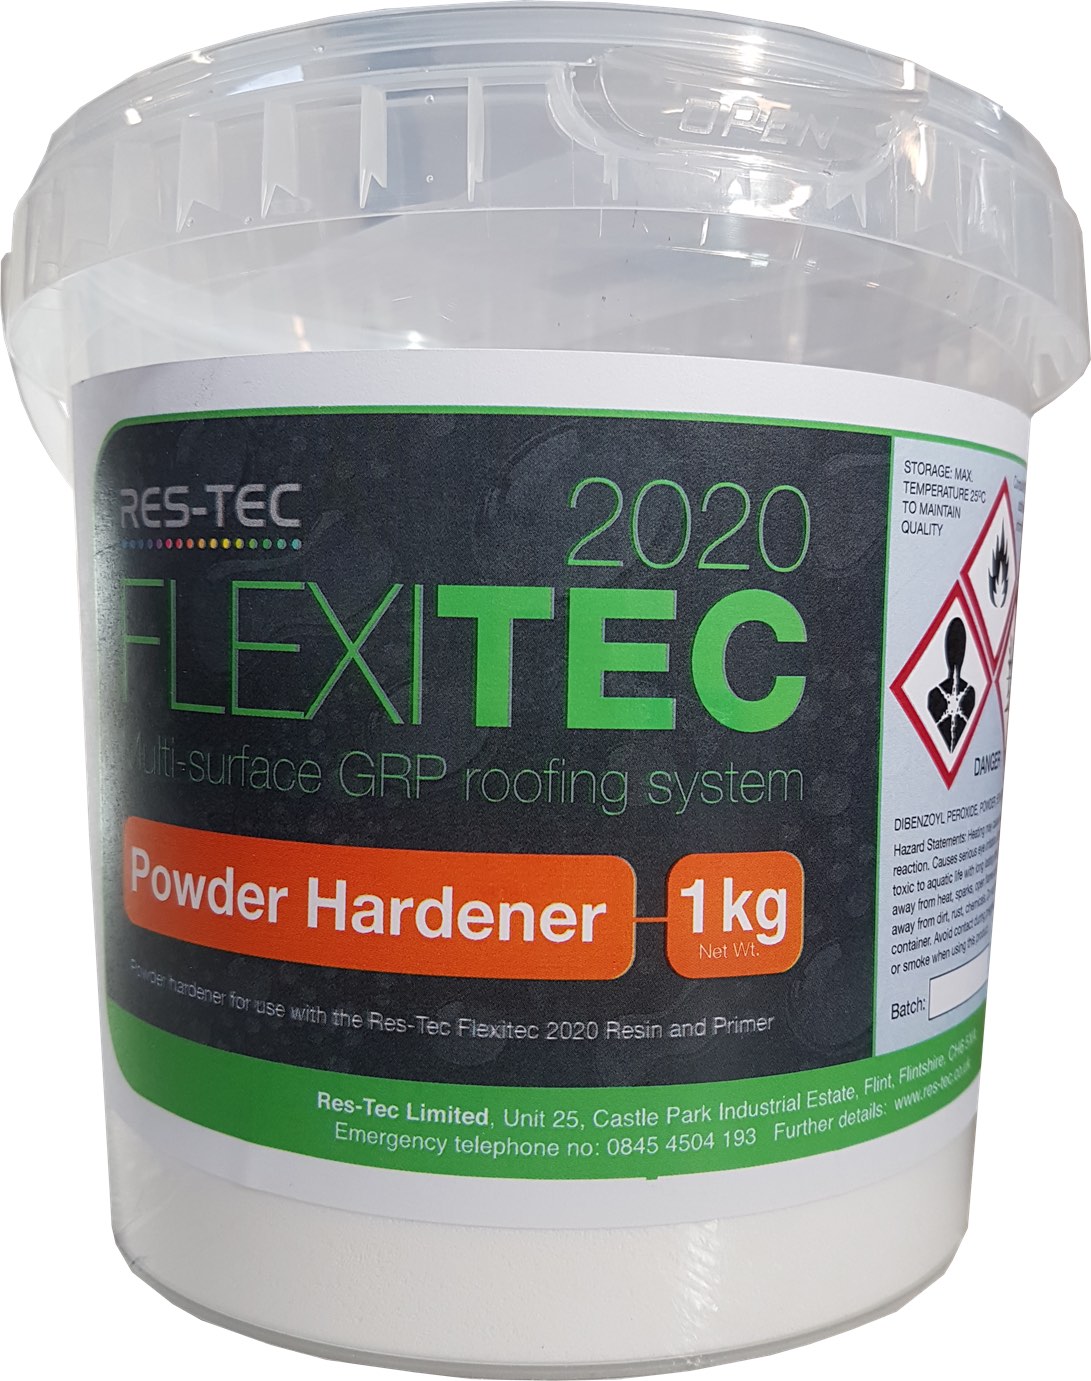 Flexitec Powder Hardener 1kg